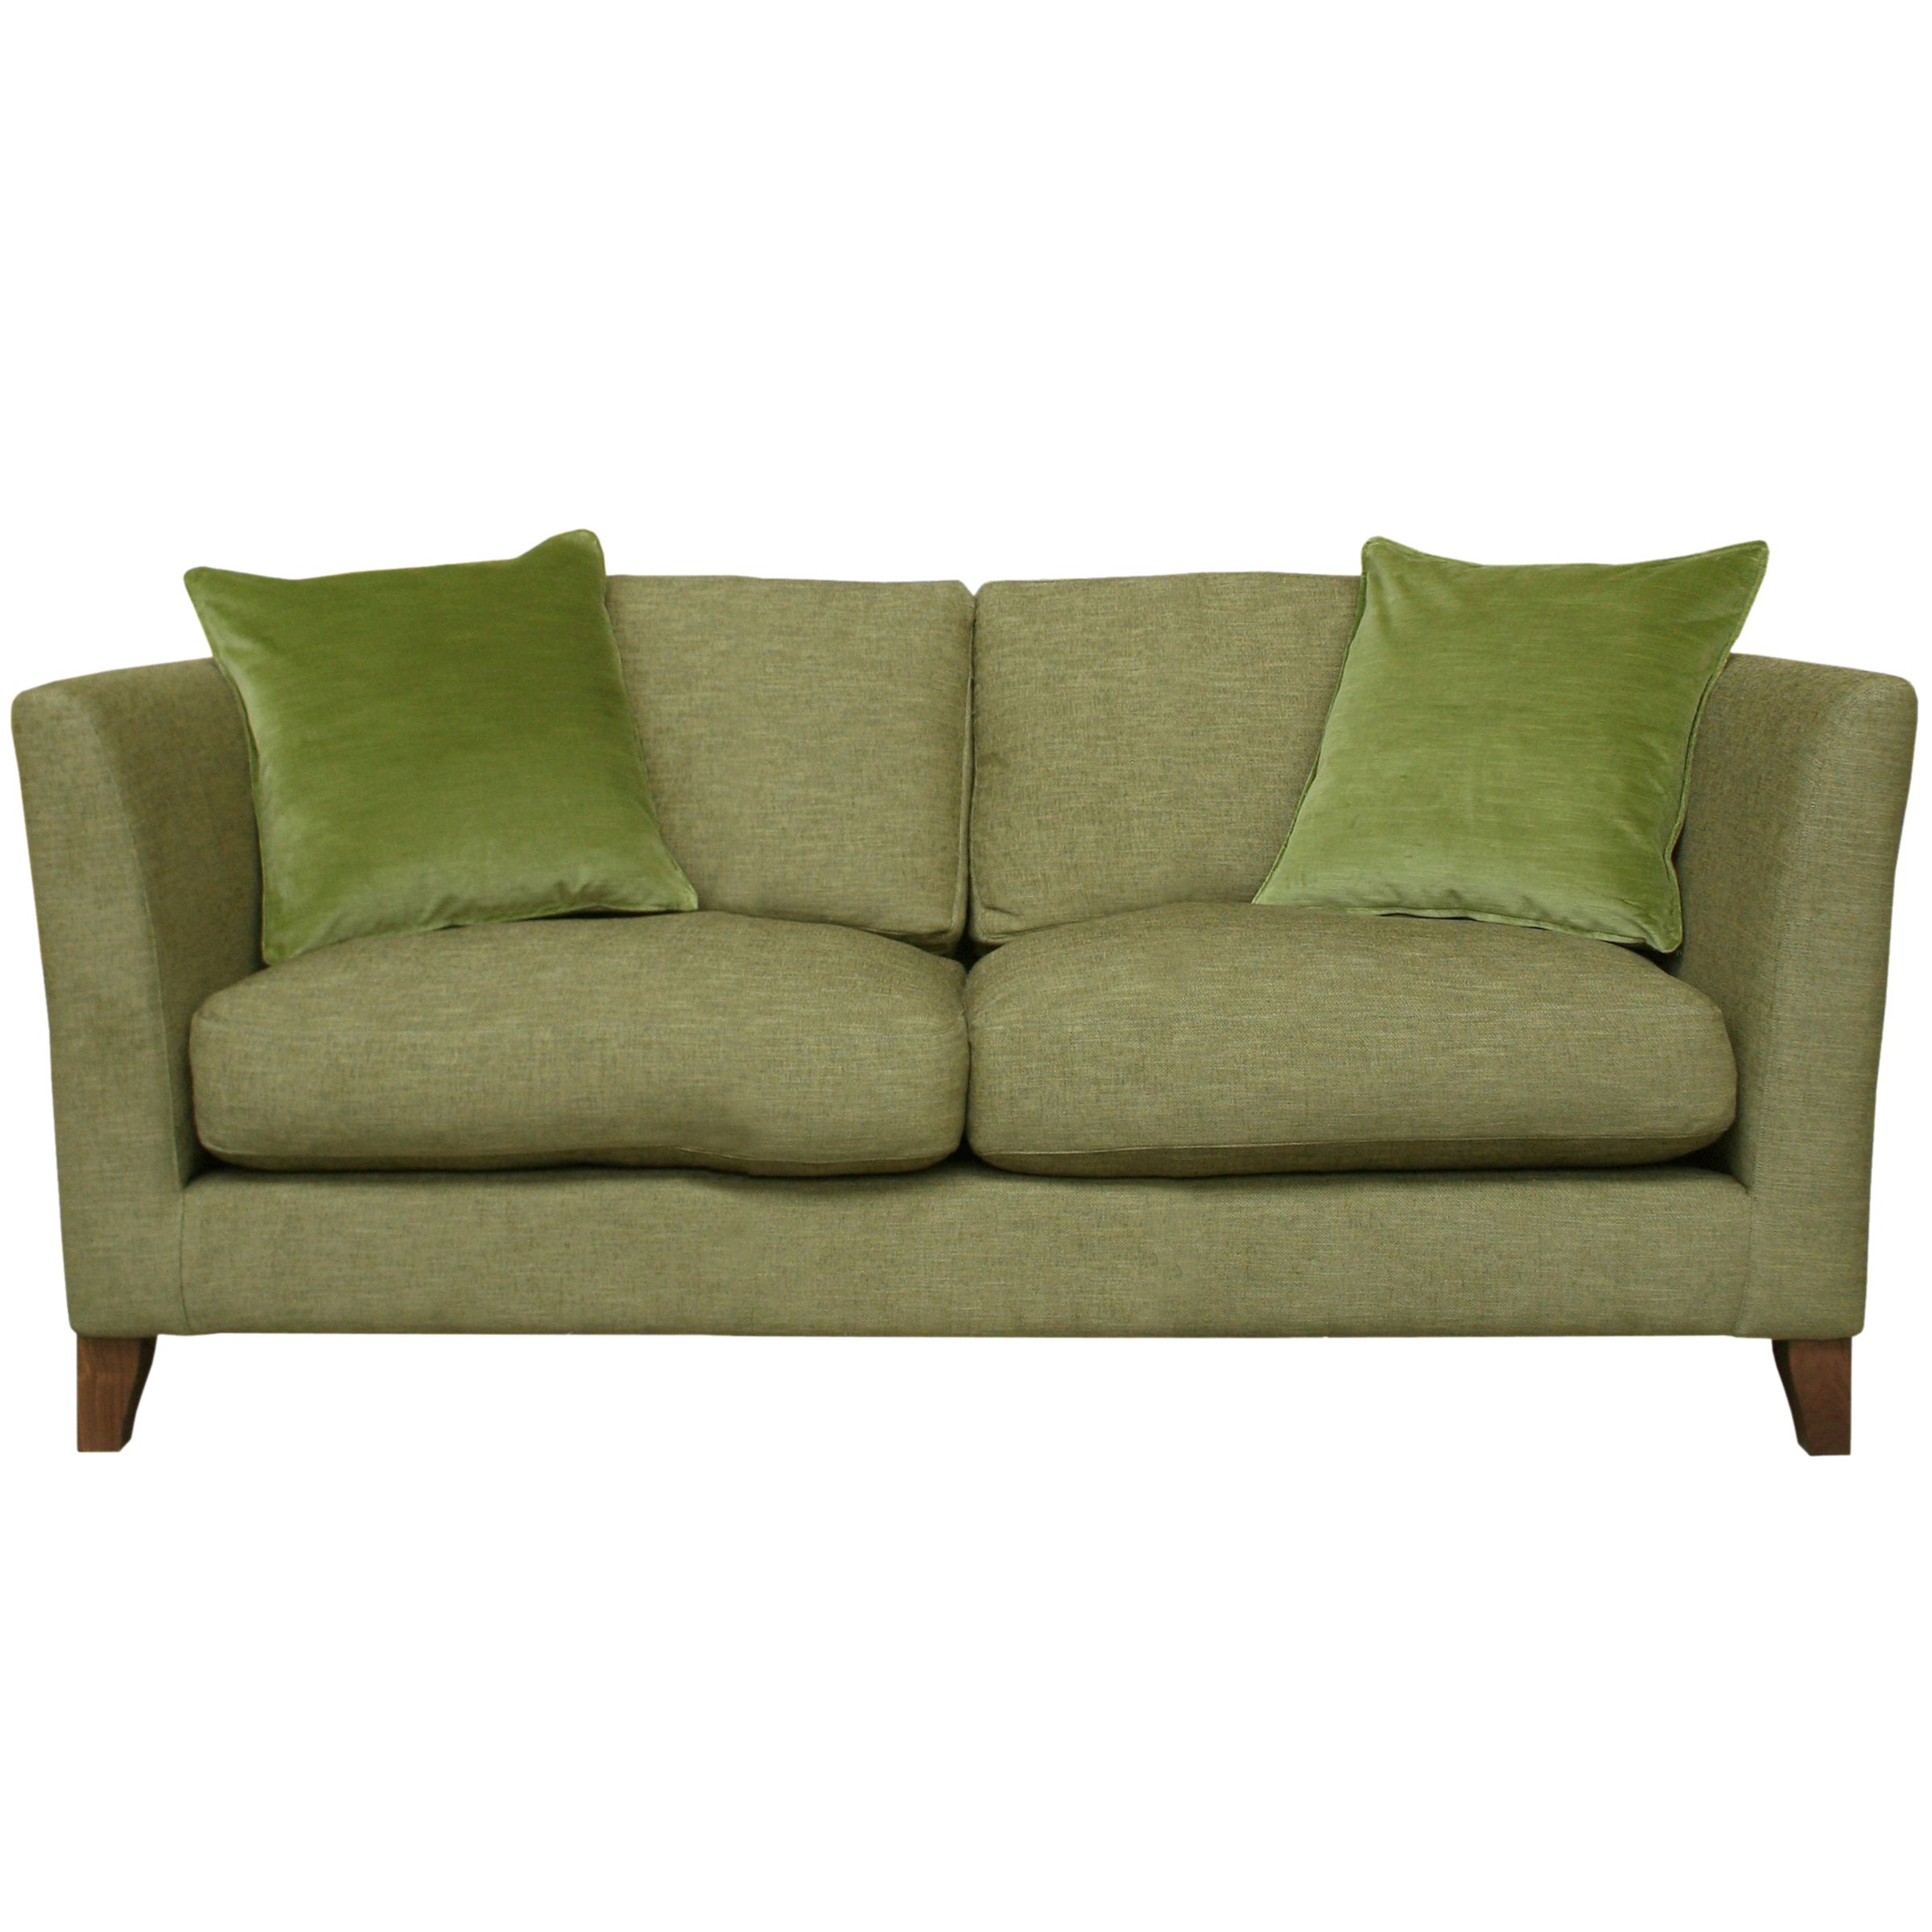 Nick Munro Collection Large Sofa, Cushion Back,